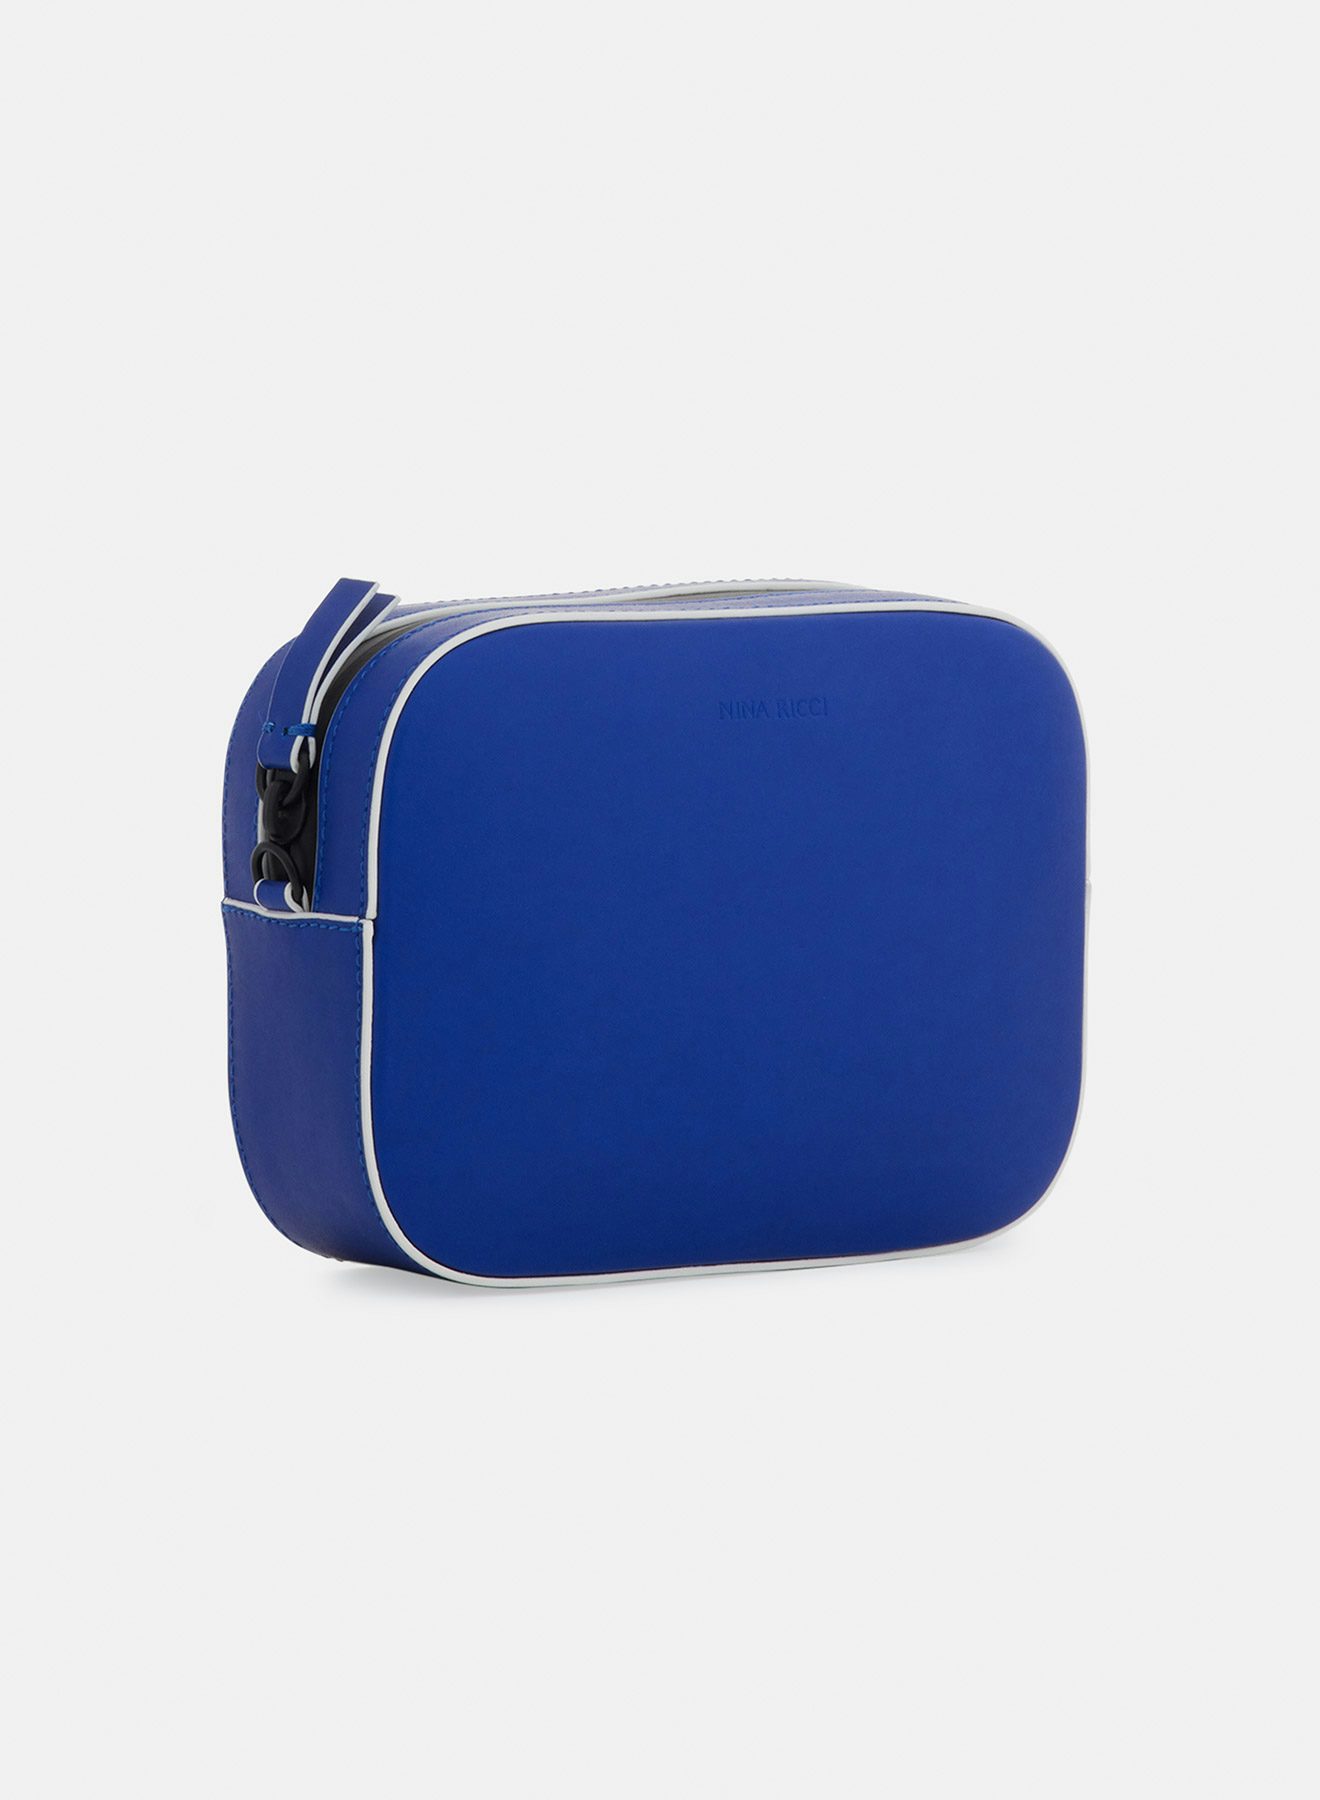 Leather camera bag klein blue - Nina Ricci